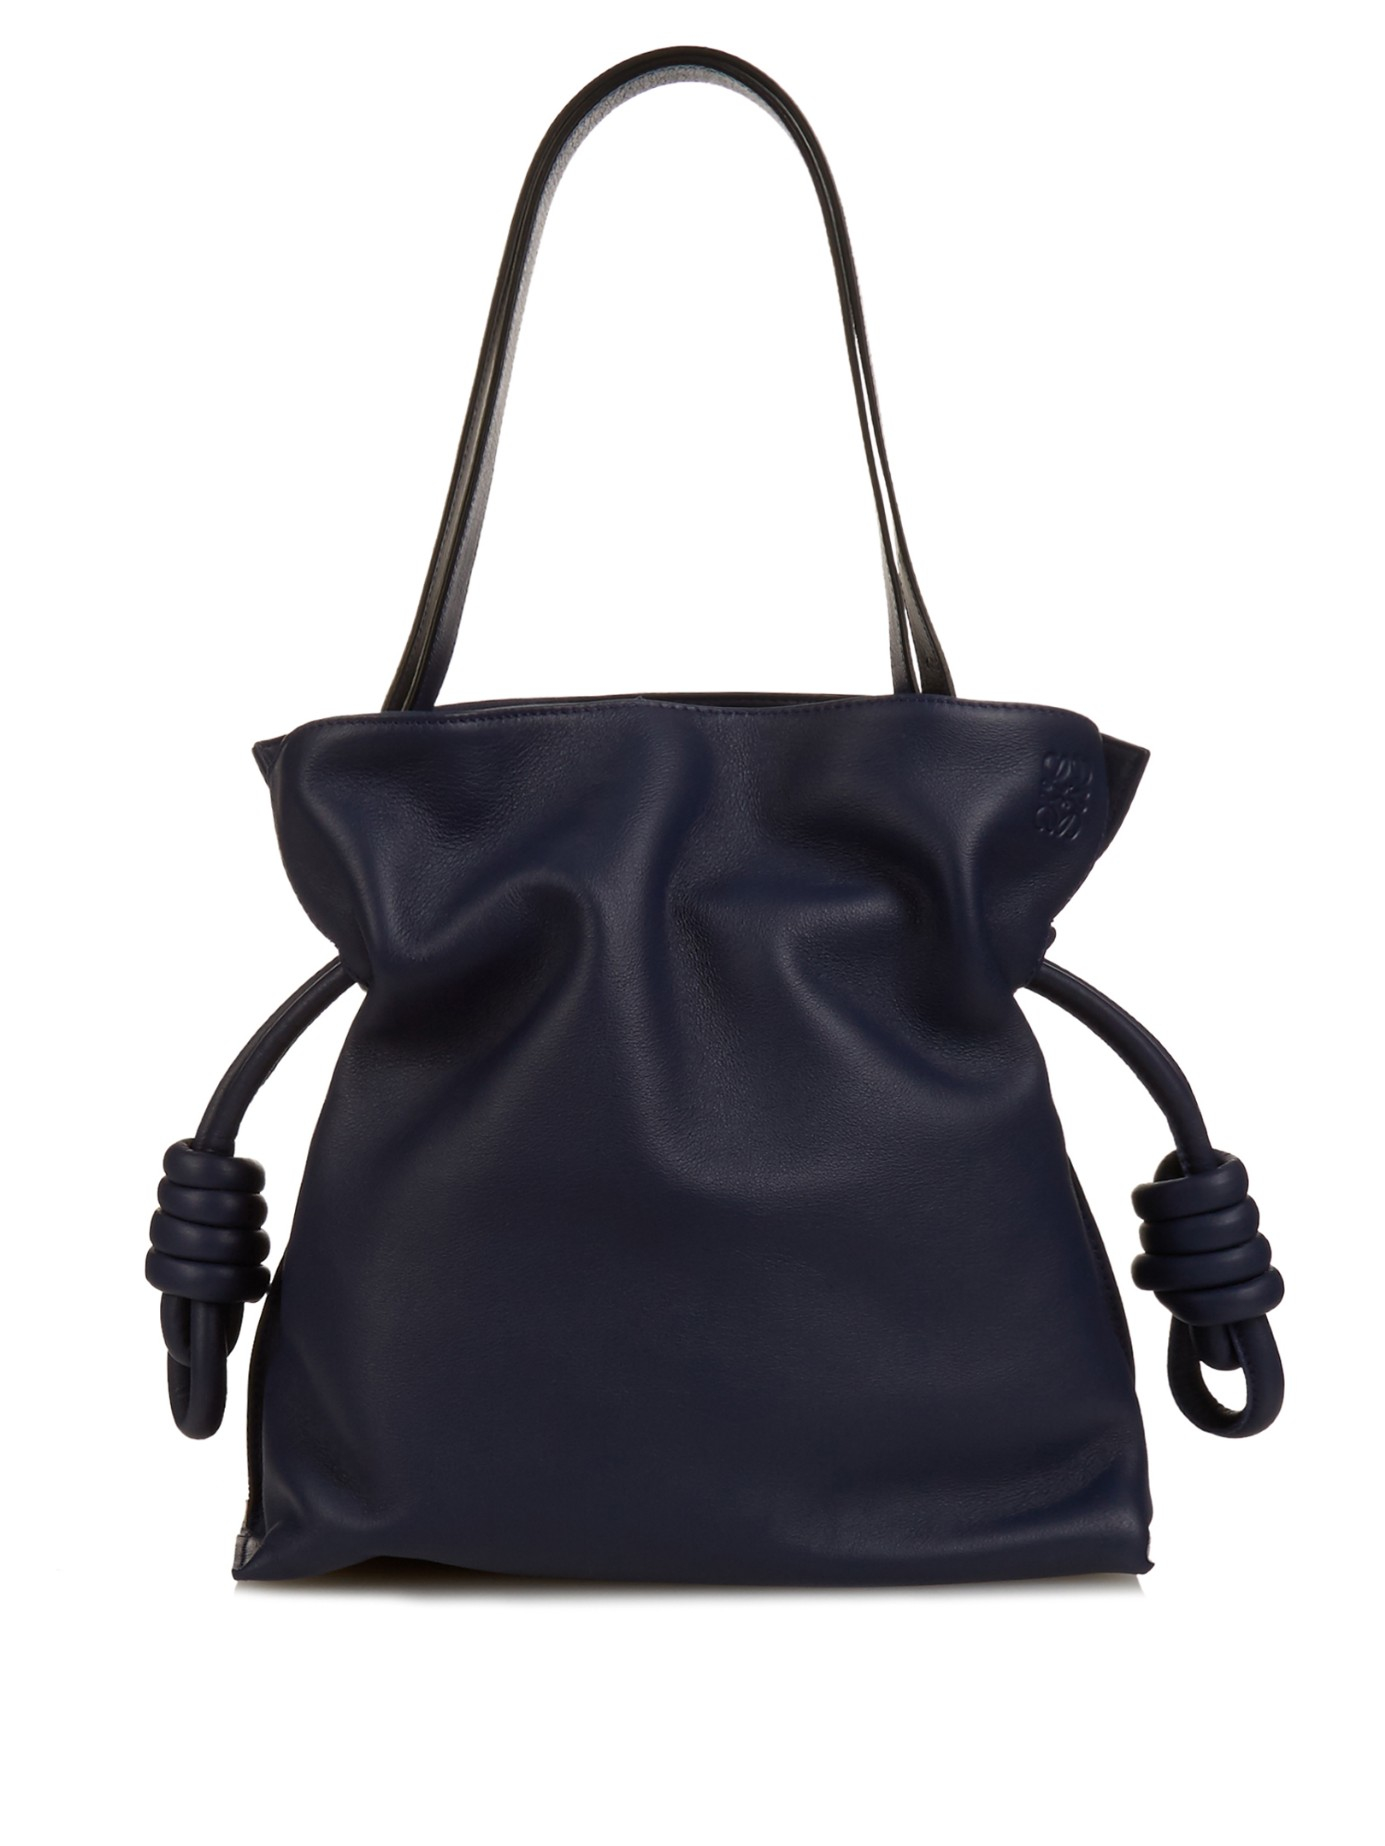 Lyst - Loewe Flamenco Knot Leather Bag in Blue